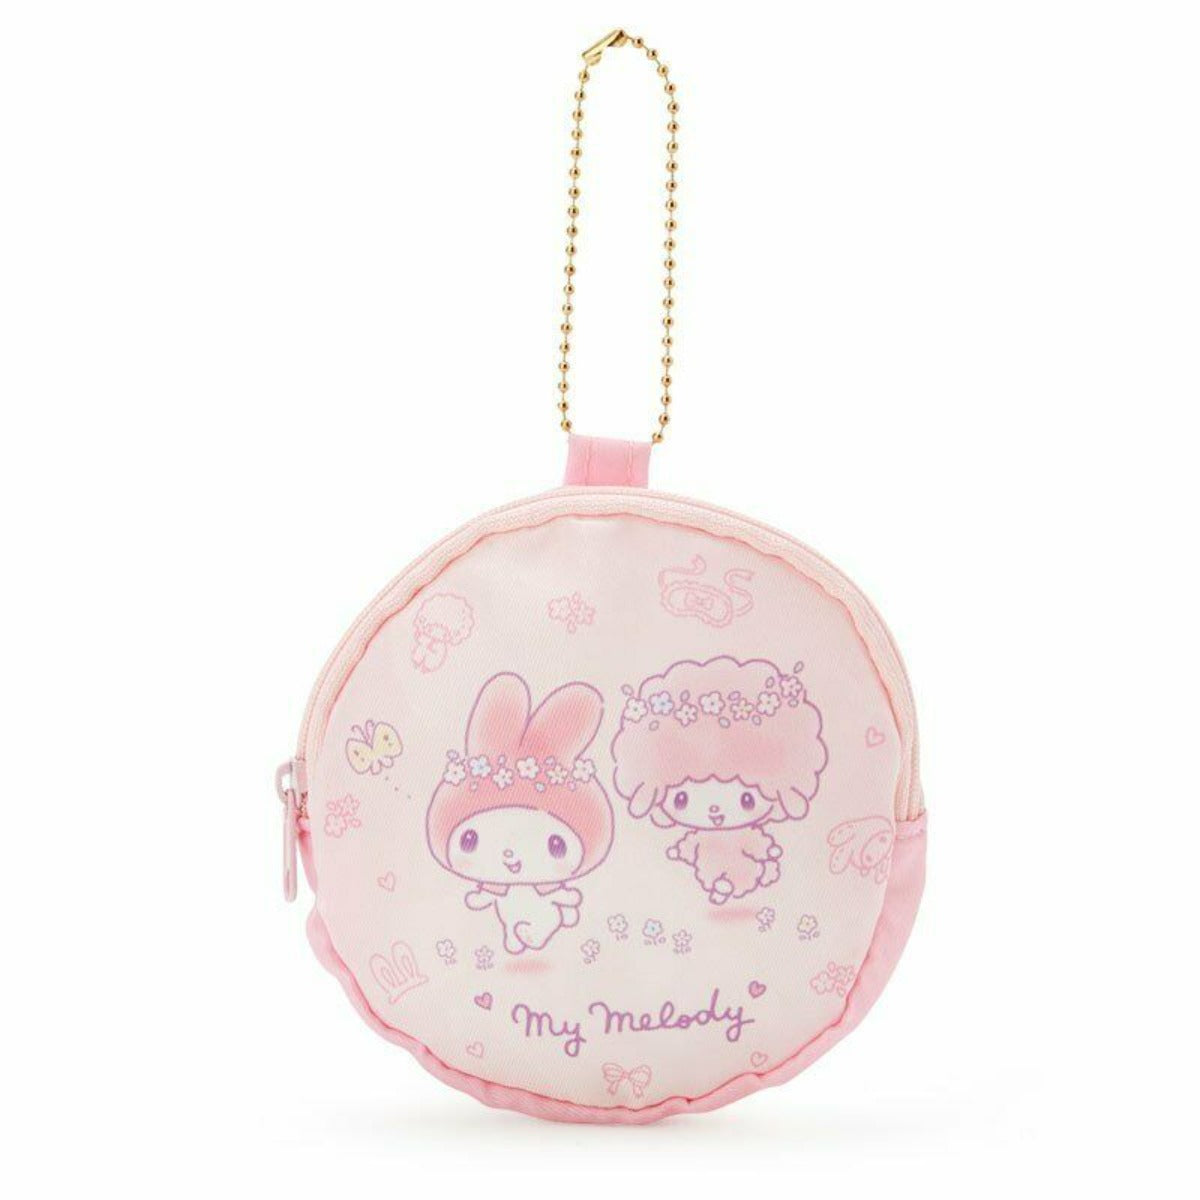 Eco Bag - Sanrio My Melody & Friend 30x30cm Pink (Japan Edition)